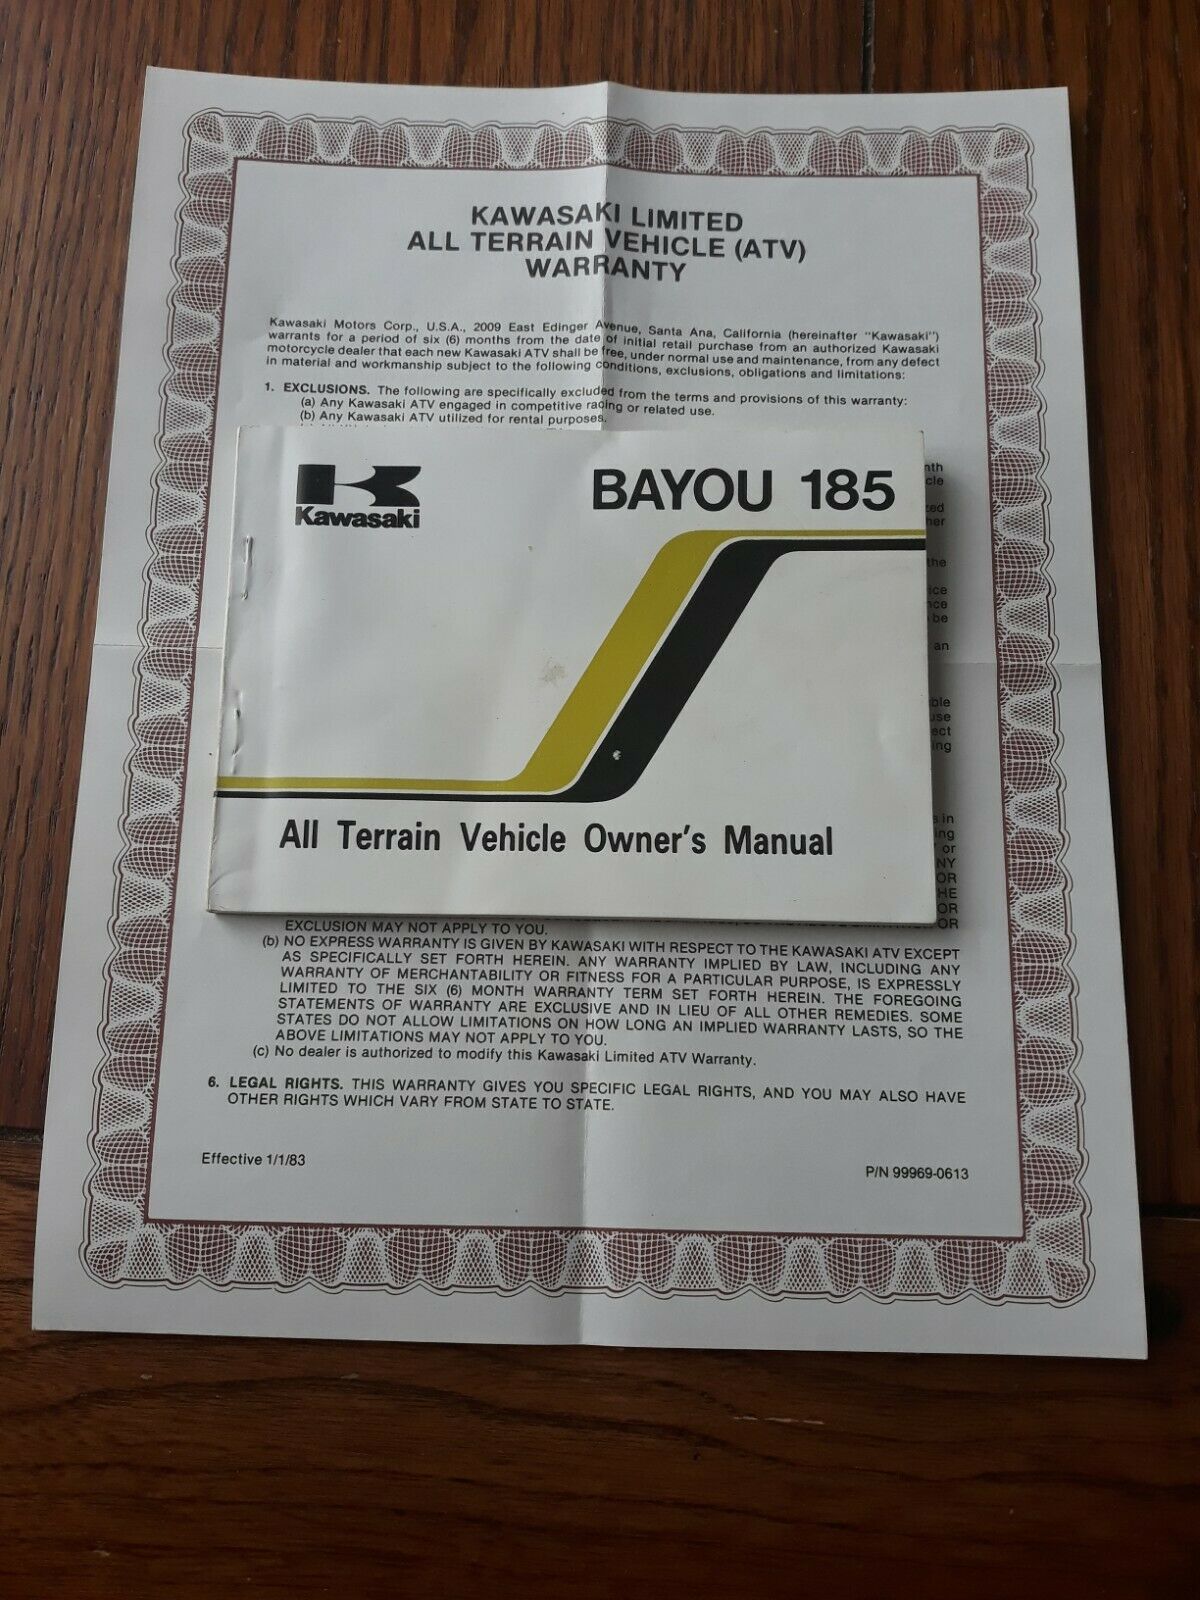 Original Kawasaki 185 Bayou Atv Owner's Manual, With Warranty